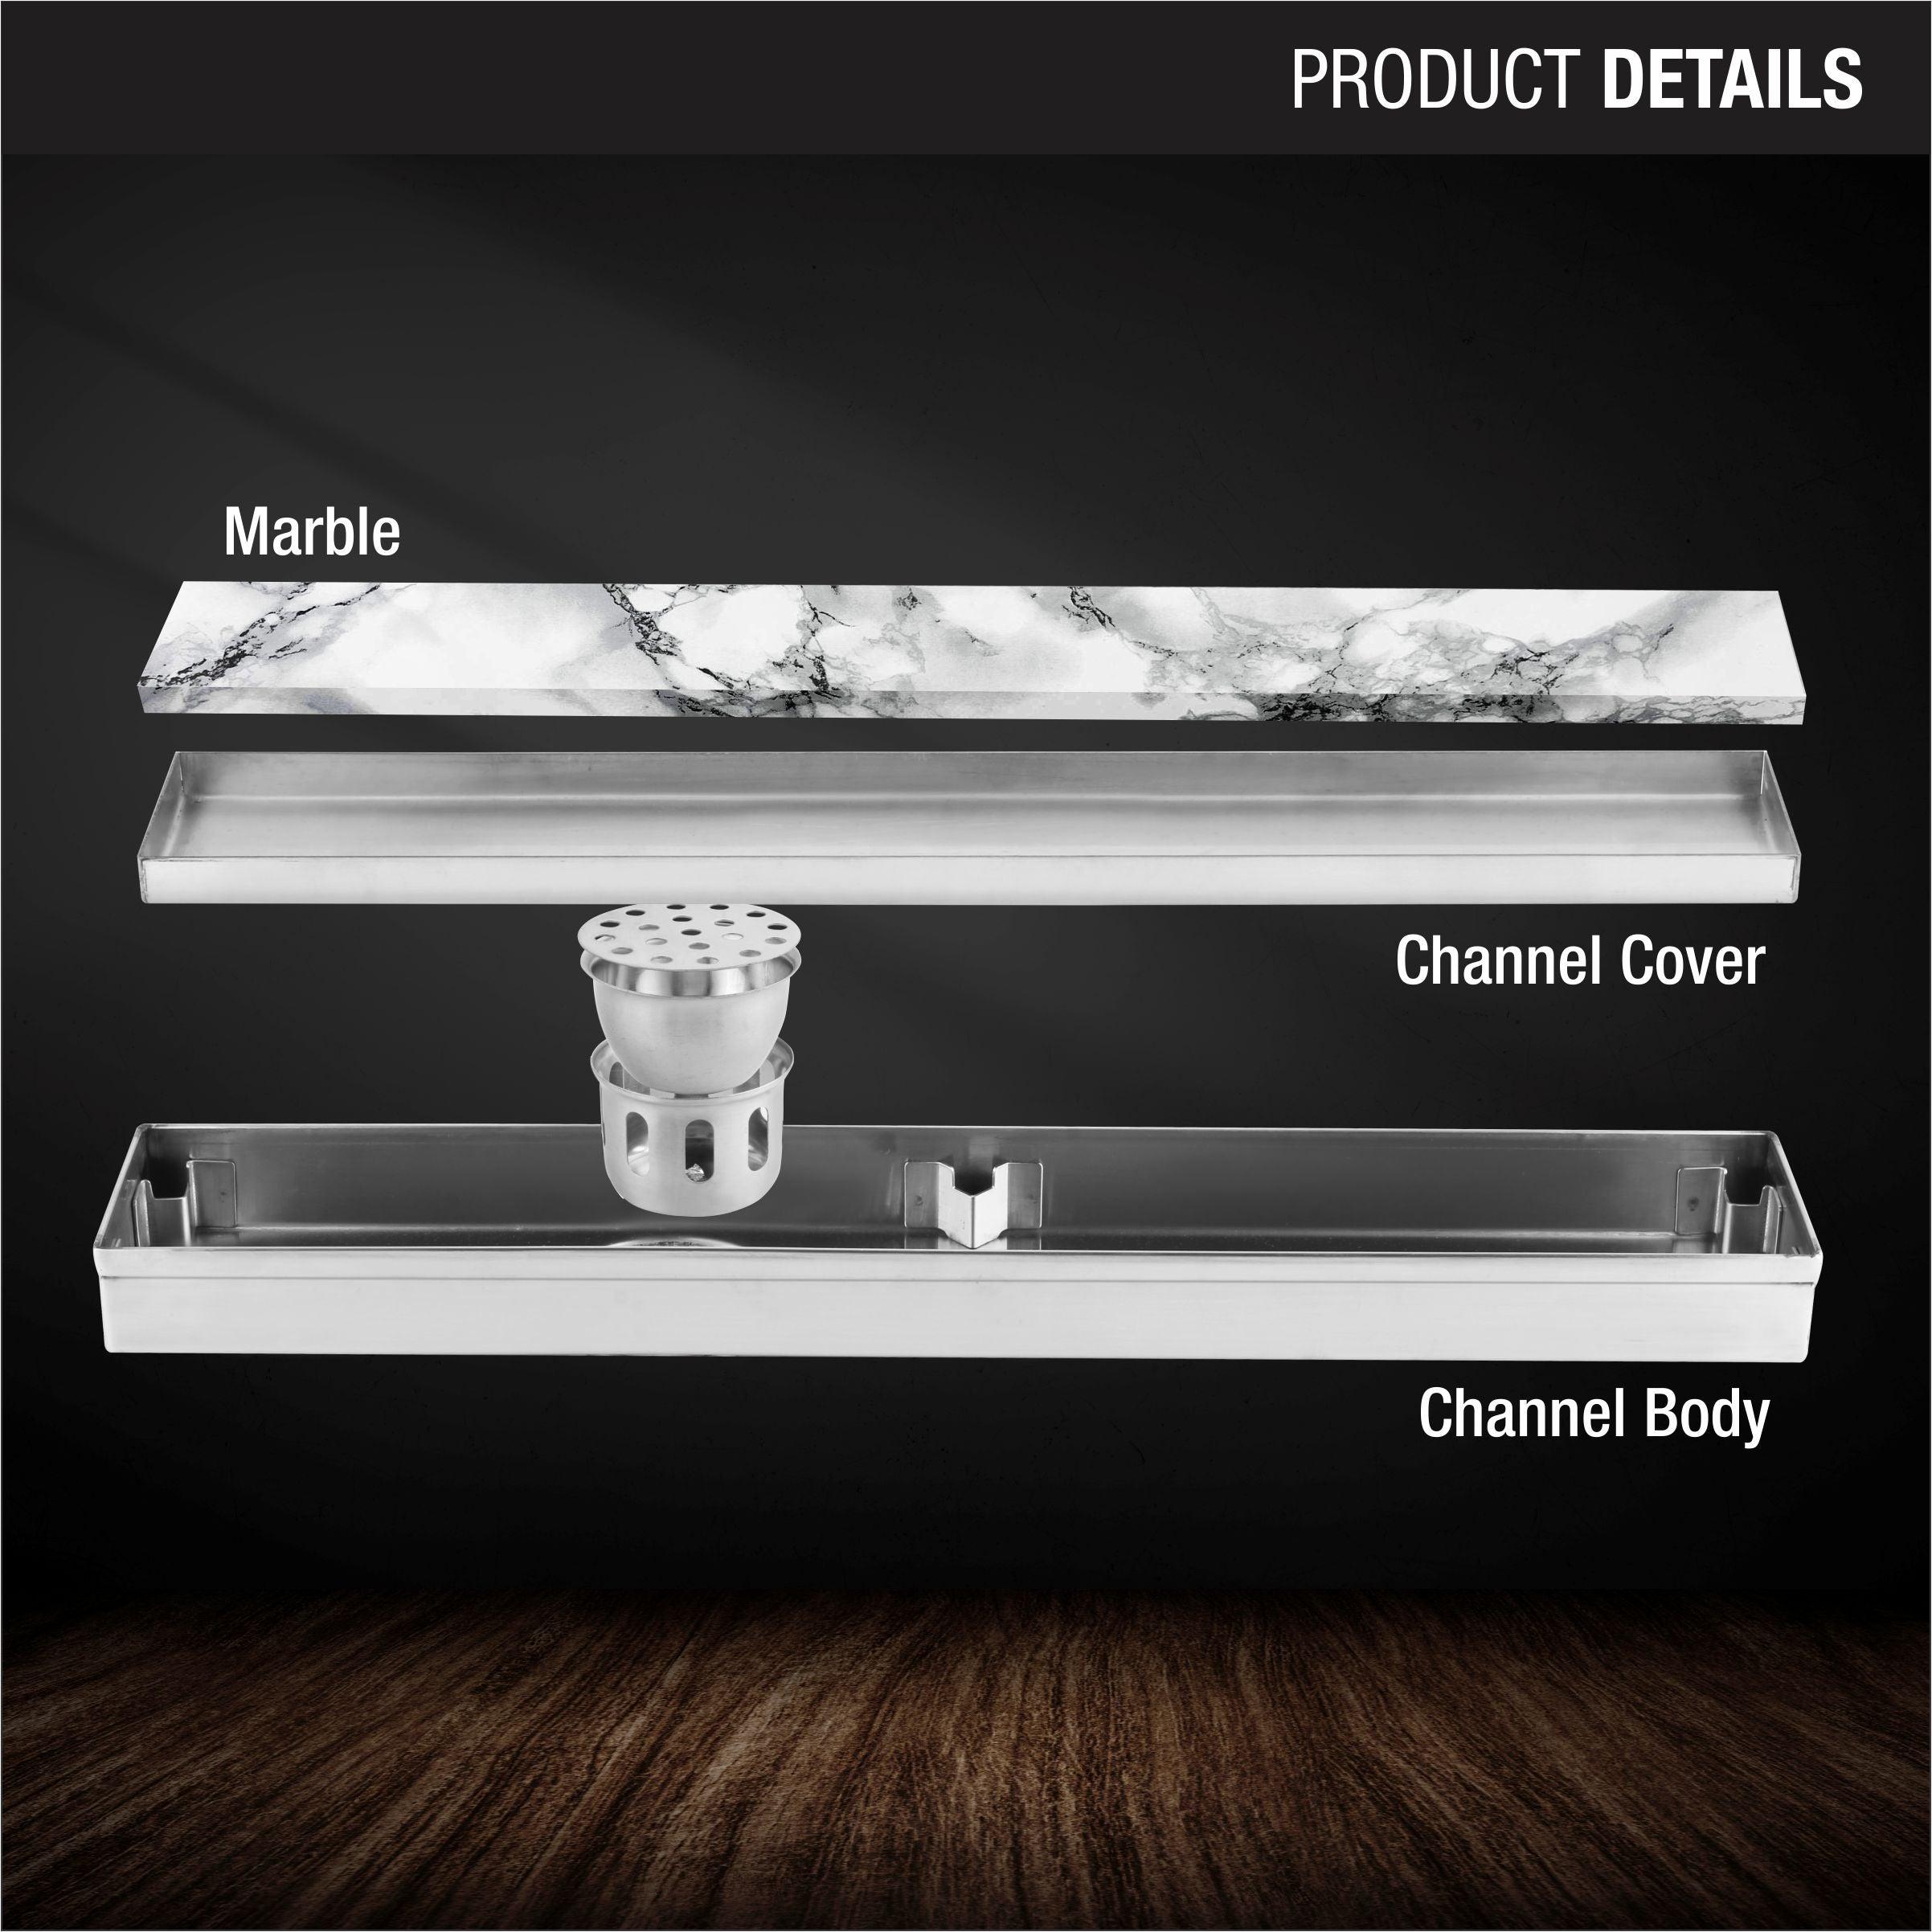 Marble Insert Shower Drain Channel (40 x 4 Inches) - LIPKA